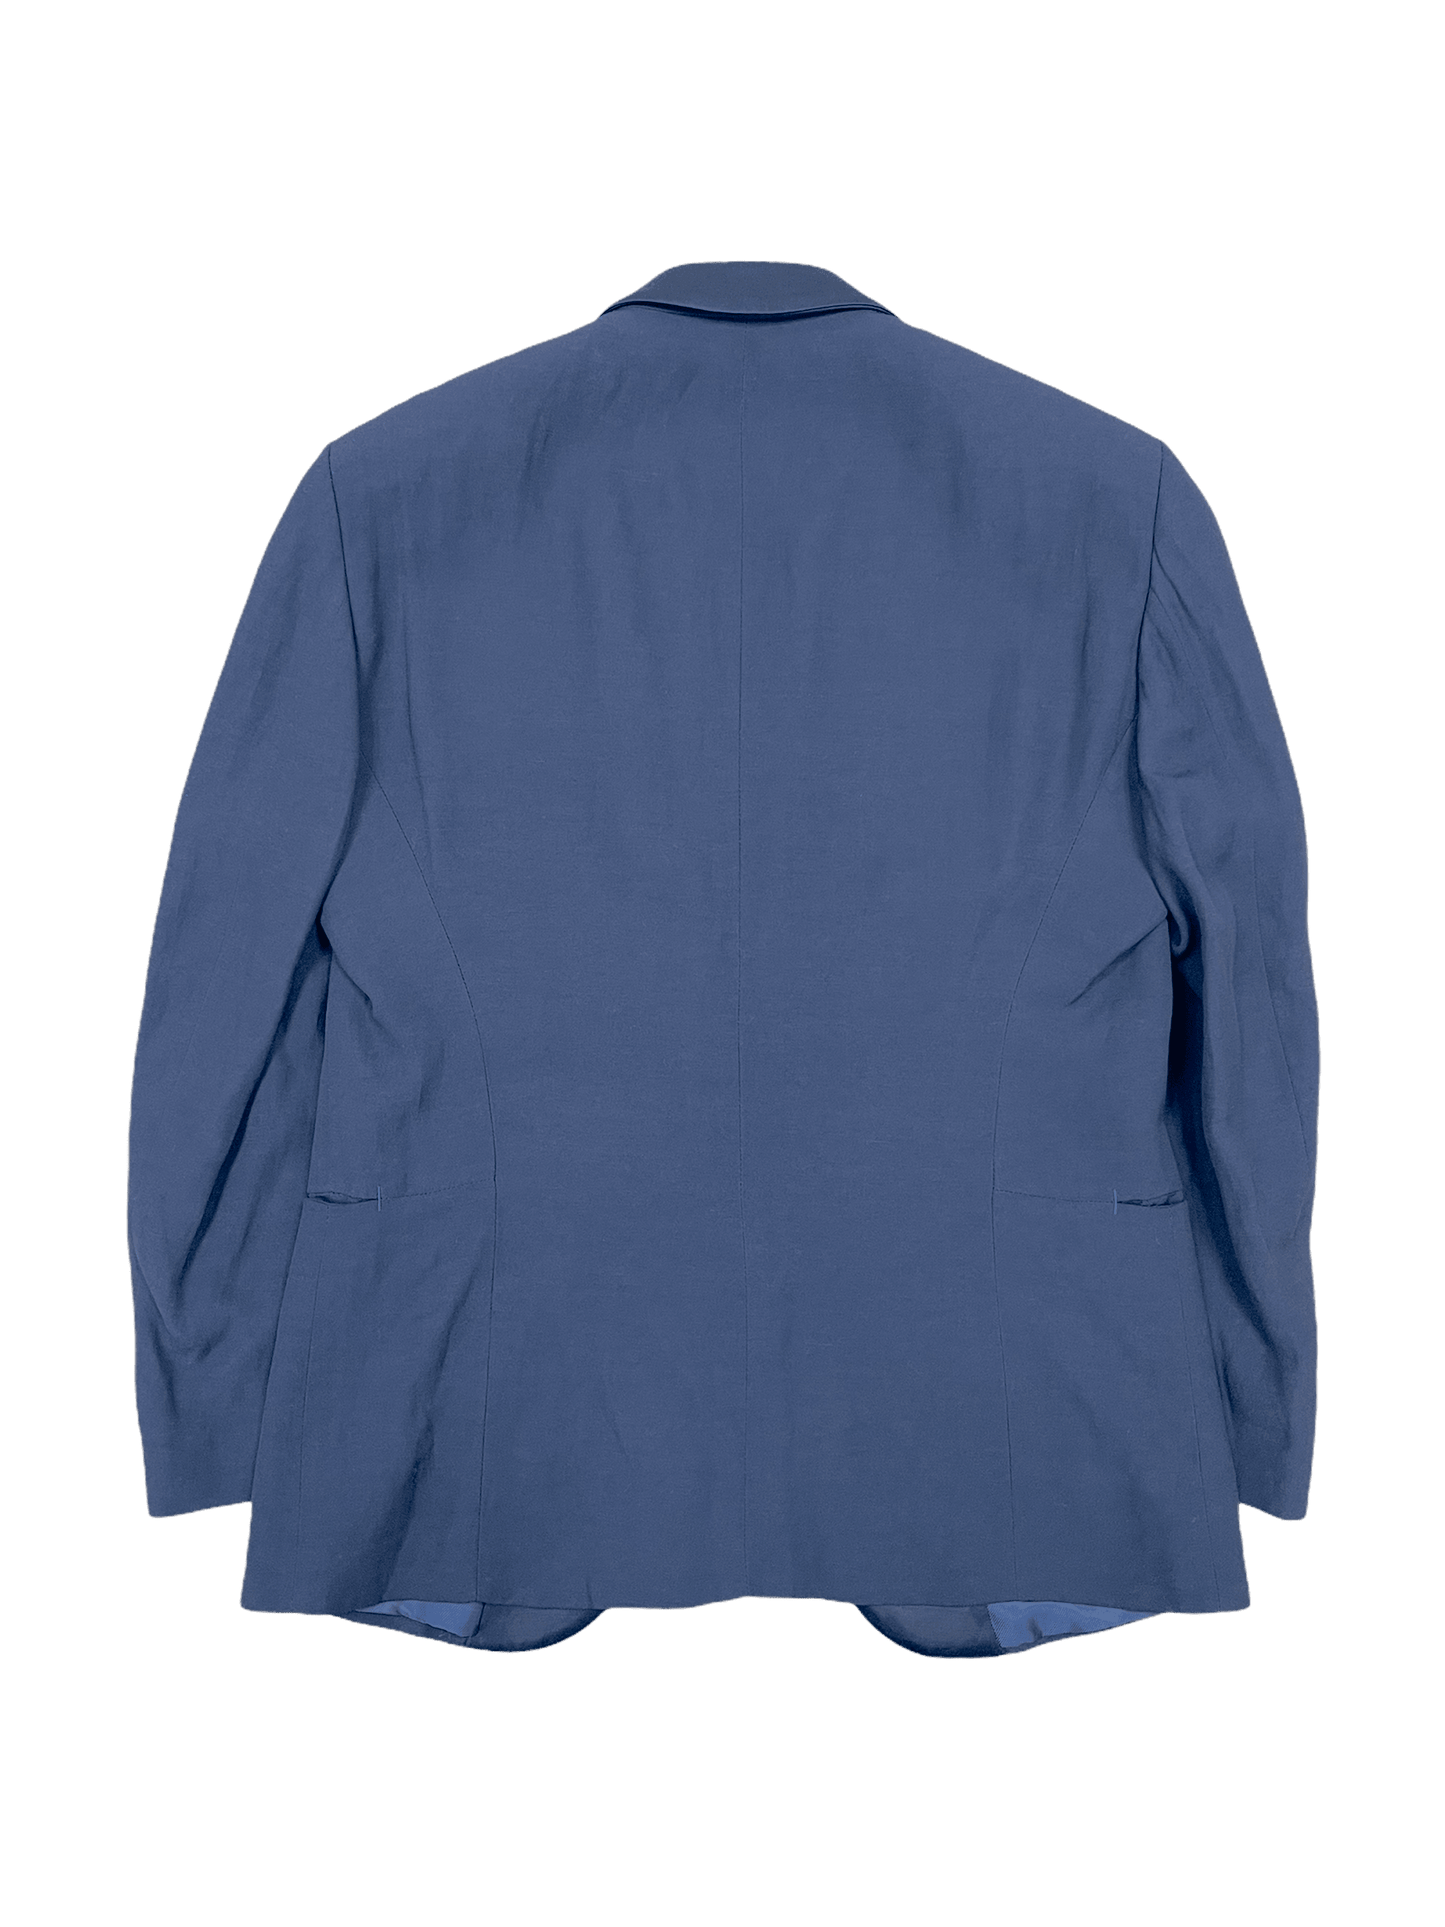 Armani Collezioni Navy Blue Tuxedo Dinner Jacket Slim Fit 42R Large - L - Genuine Design Luxury Consignment